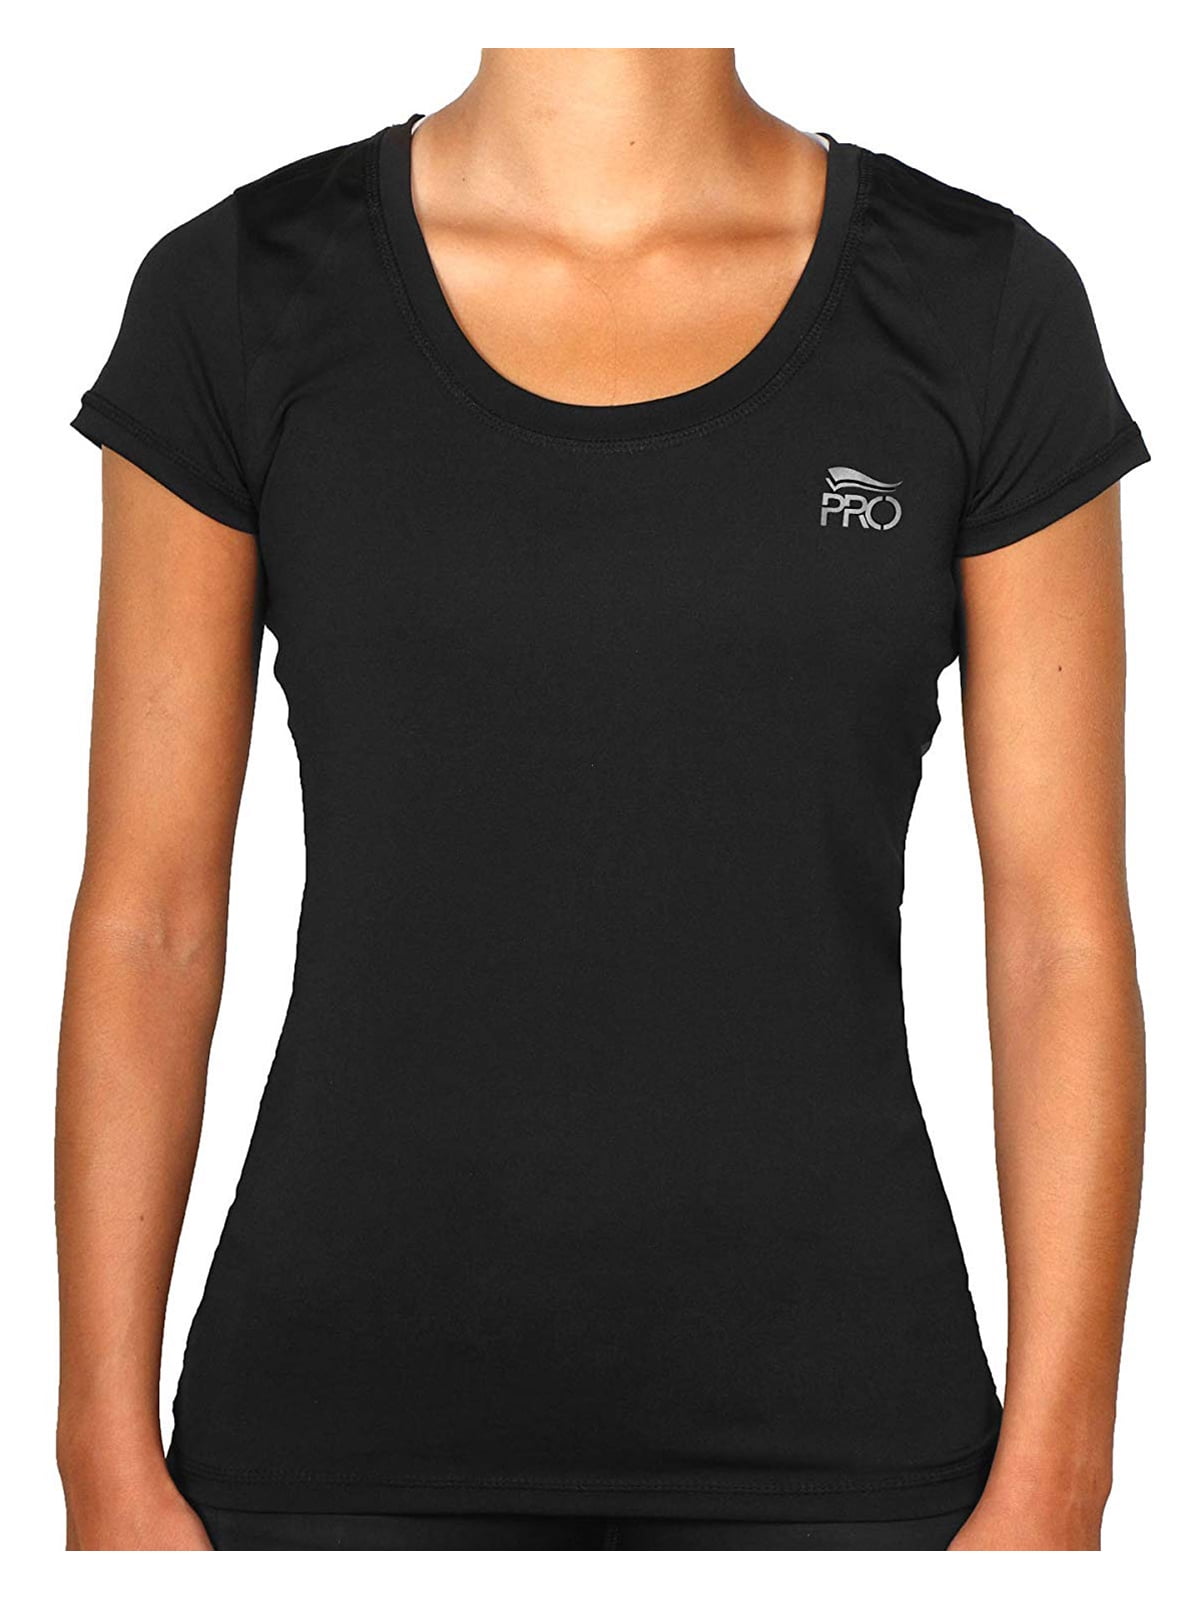 Z12 Crivit Women's Functional Shirt T-Shirt Running Sports Fitness S TO L 